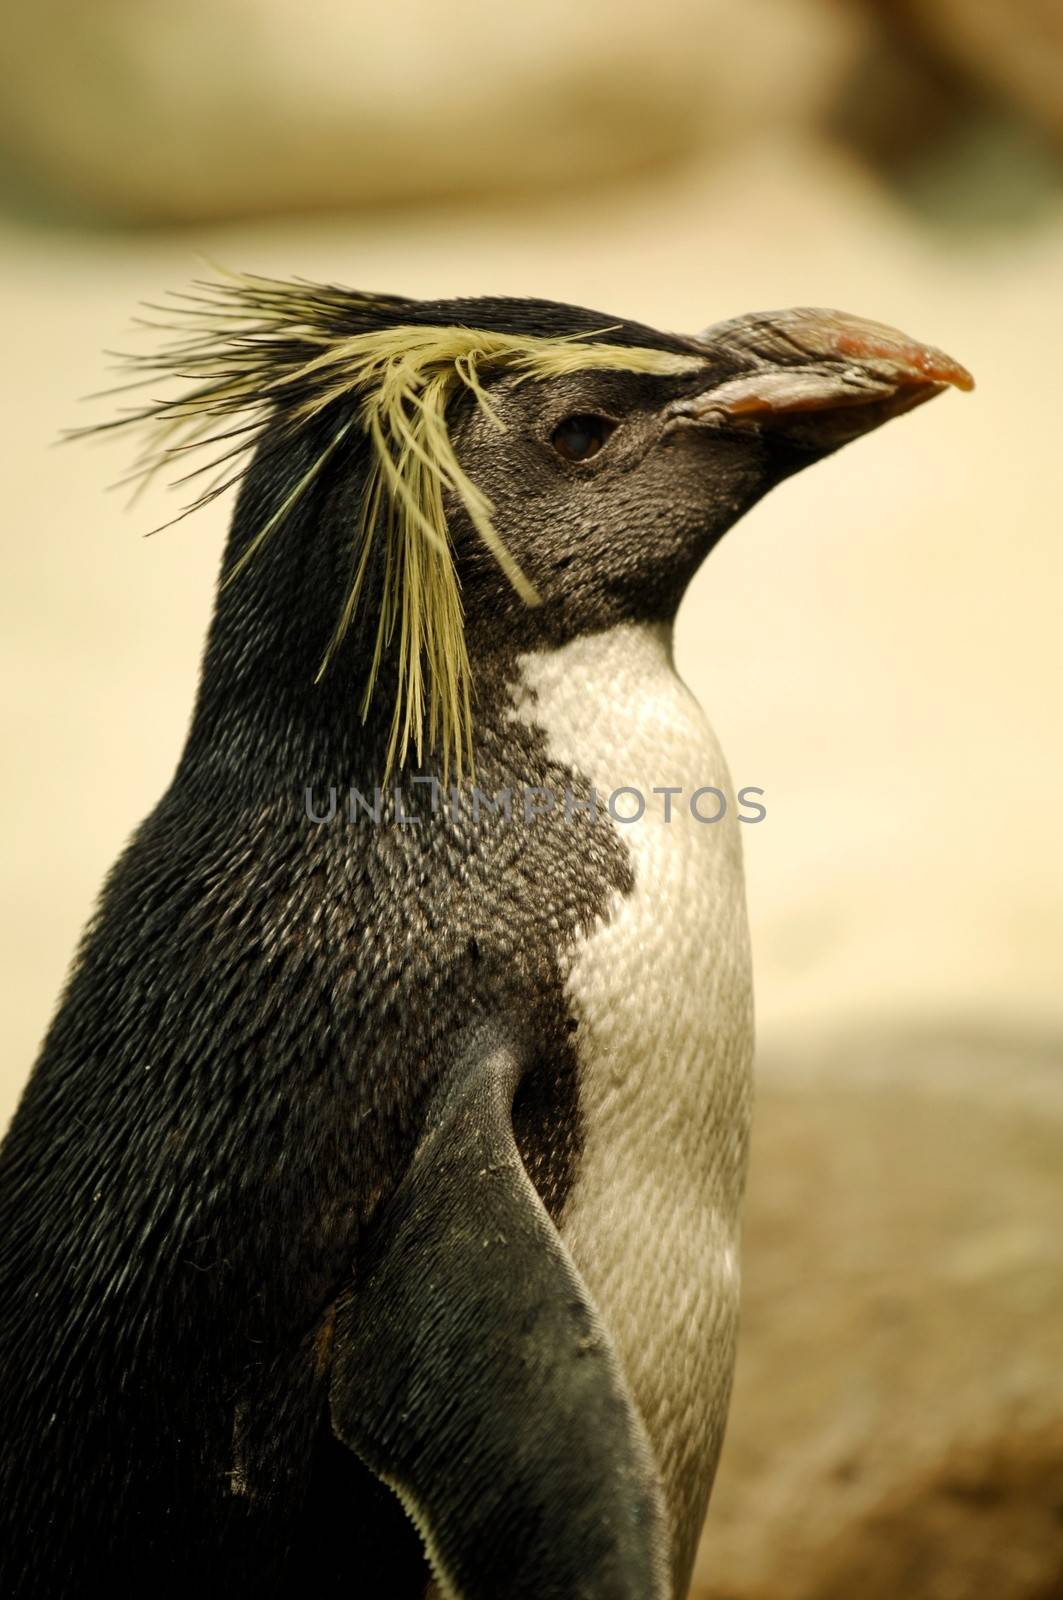 Photos of Fairy Penguins taken in captivity